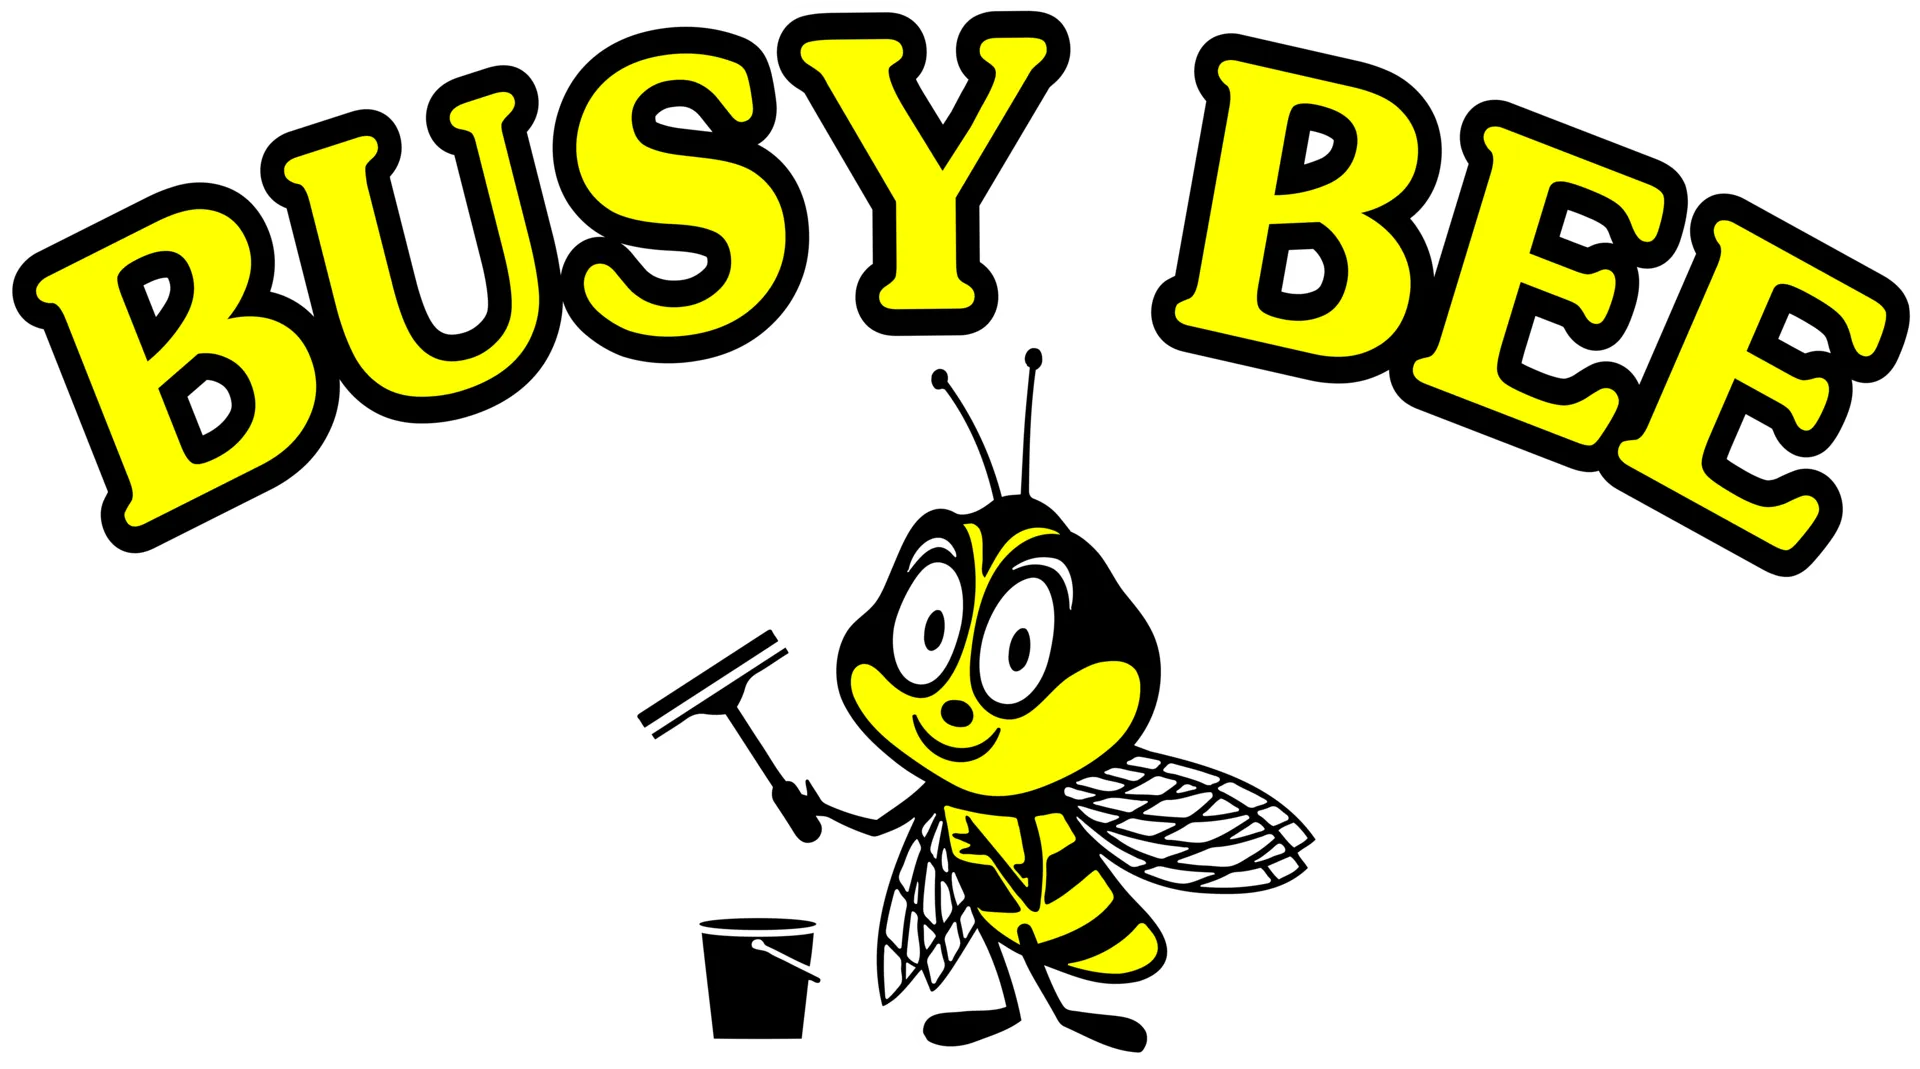 Busy Bee Window